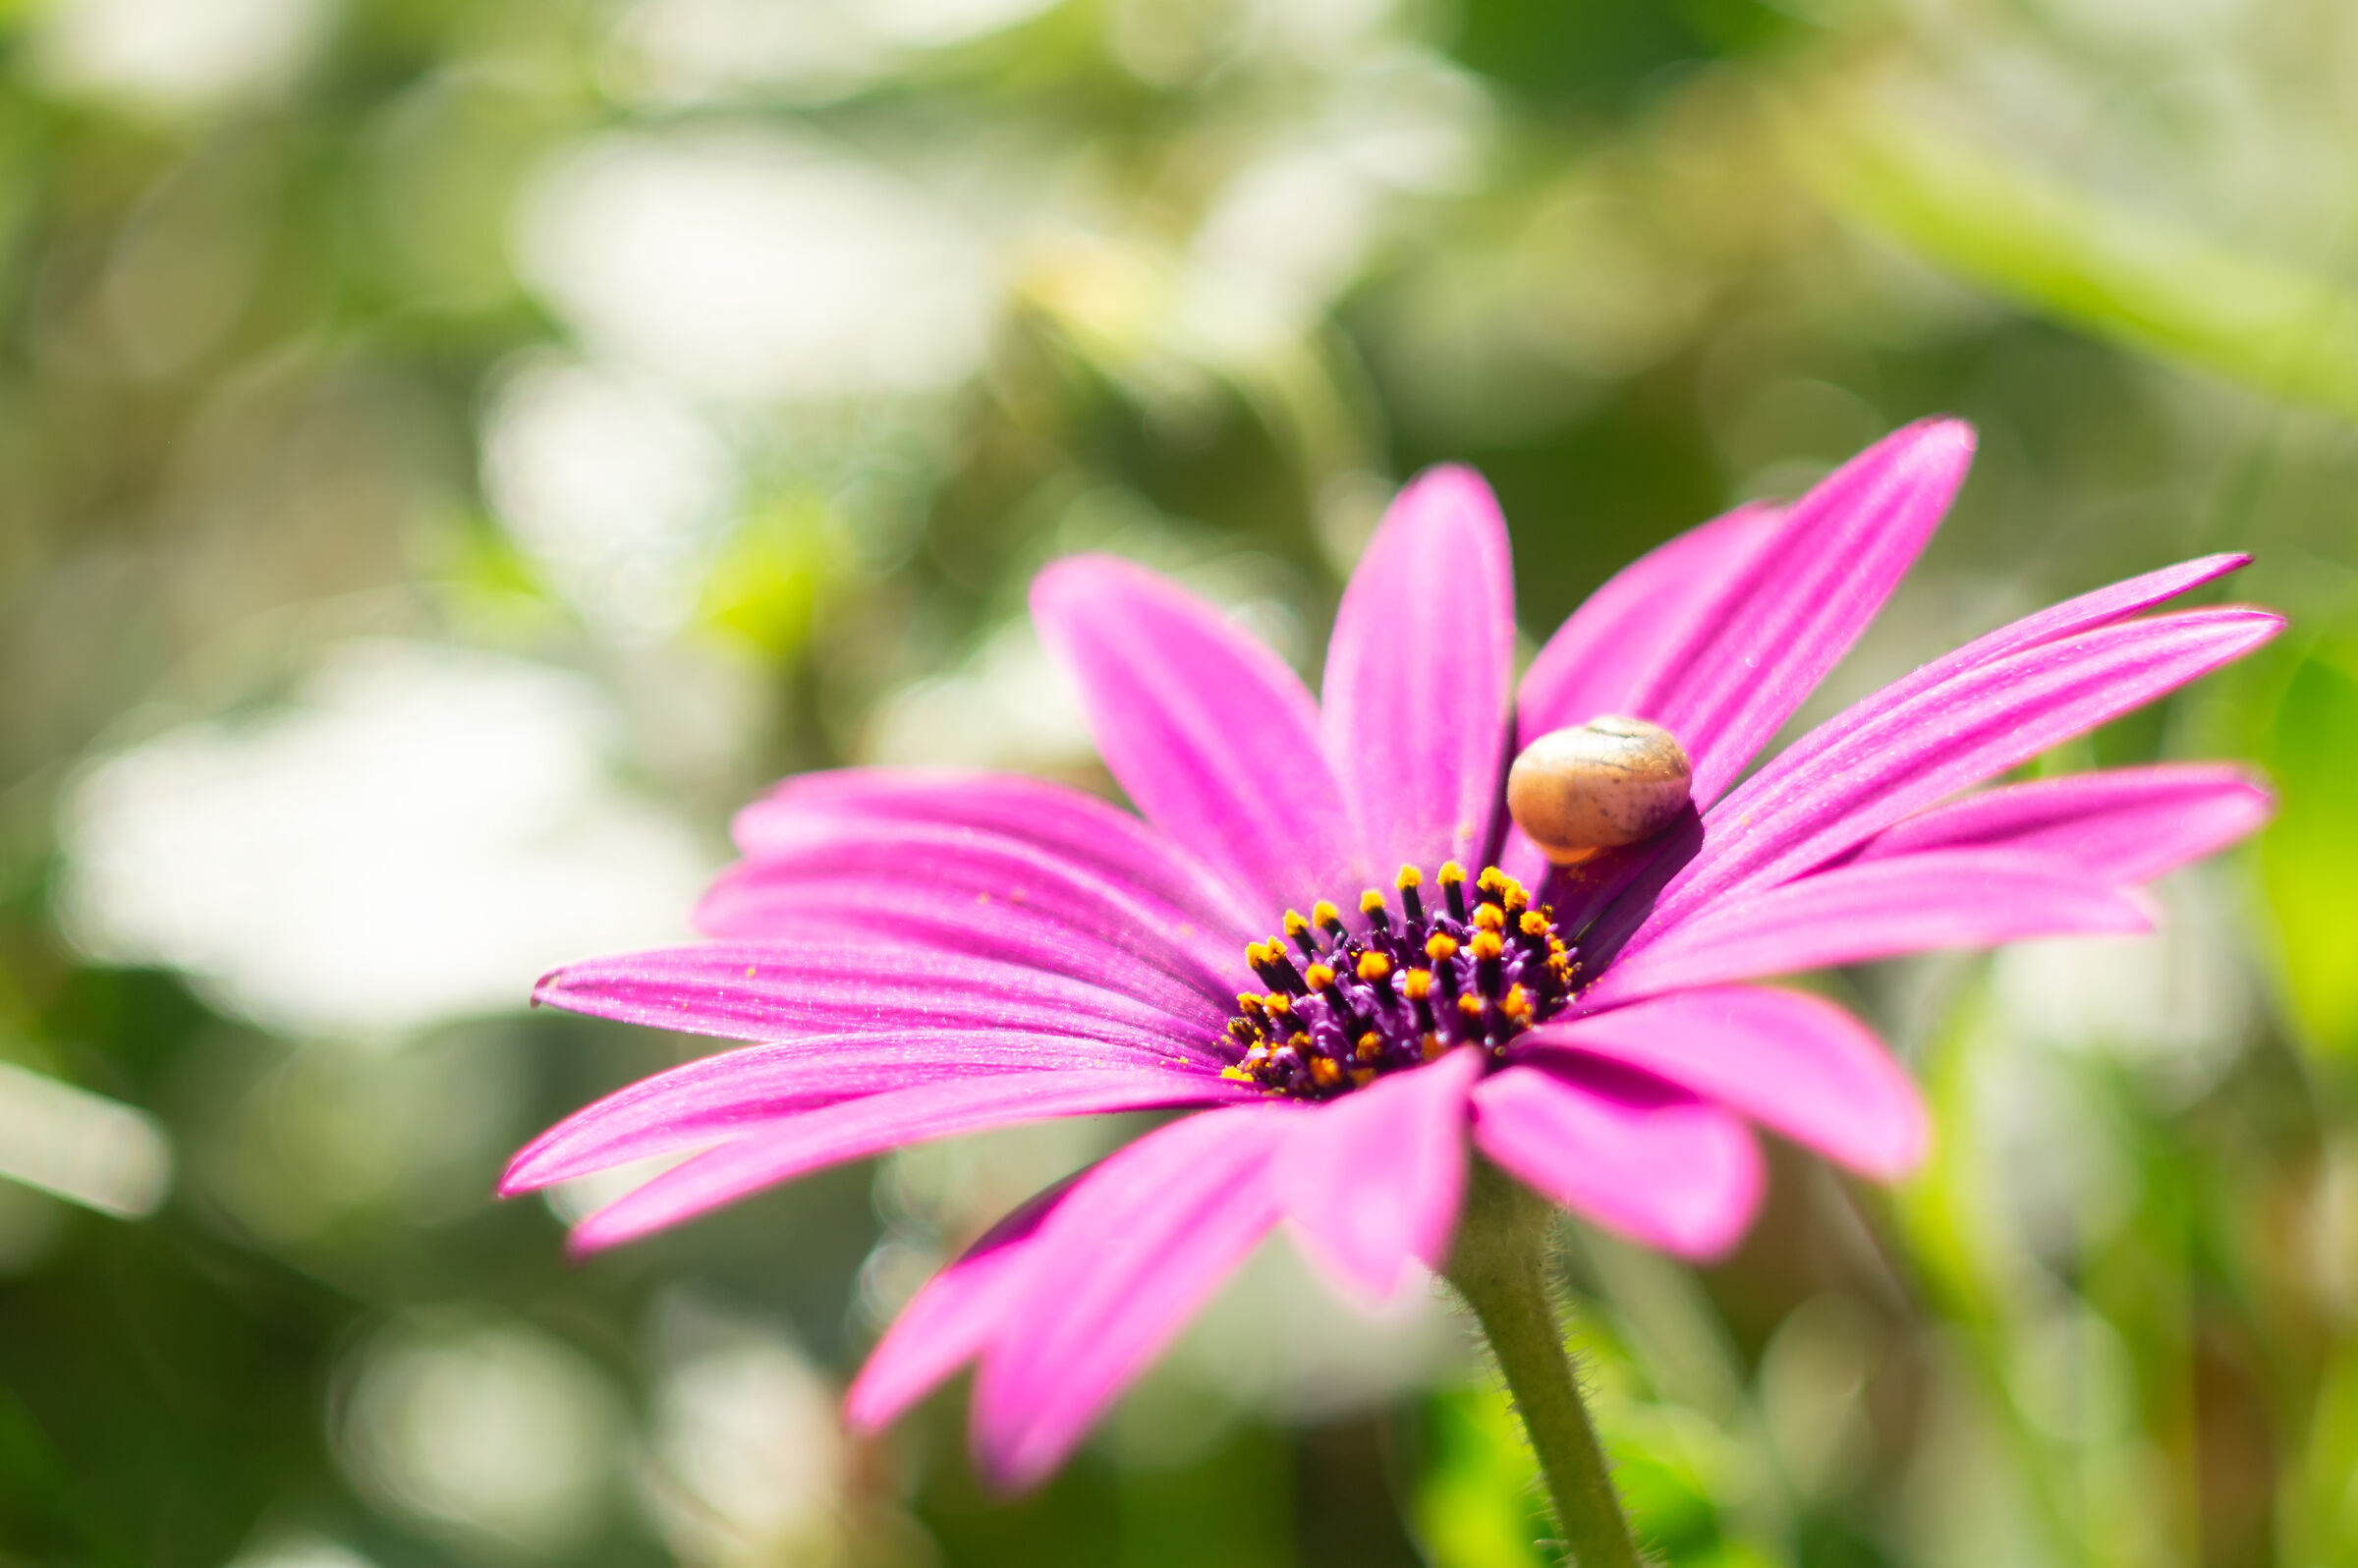 Little snail on the pink daisy...